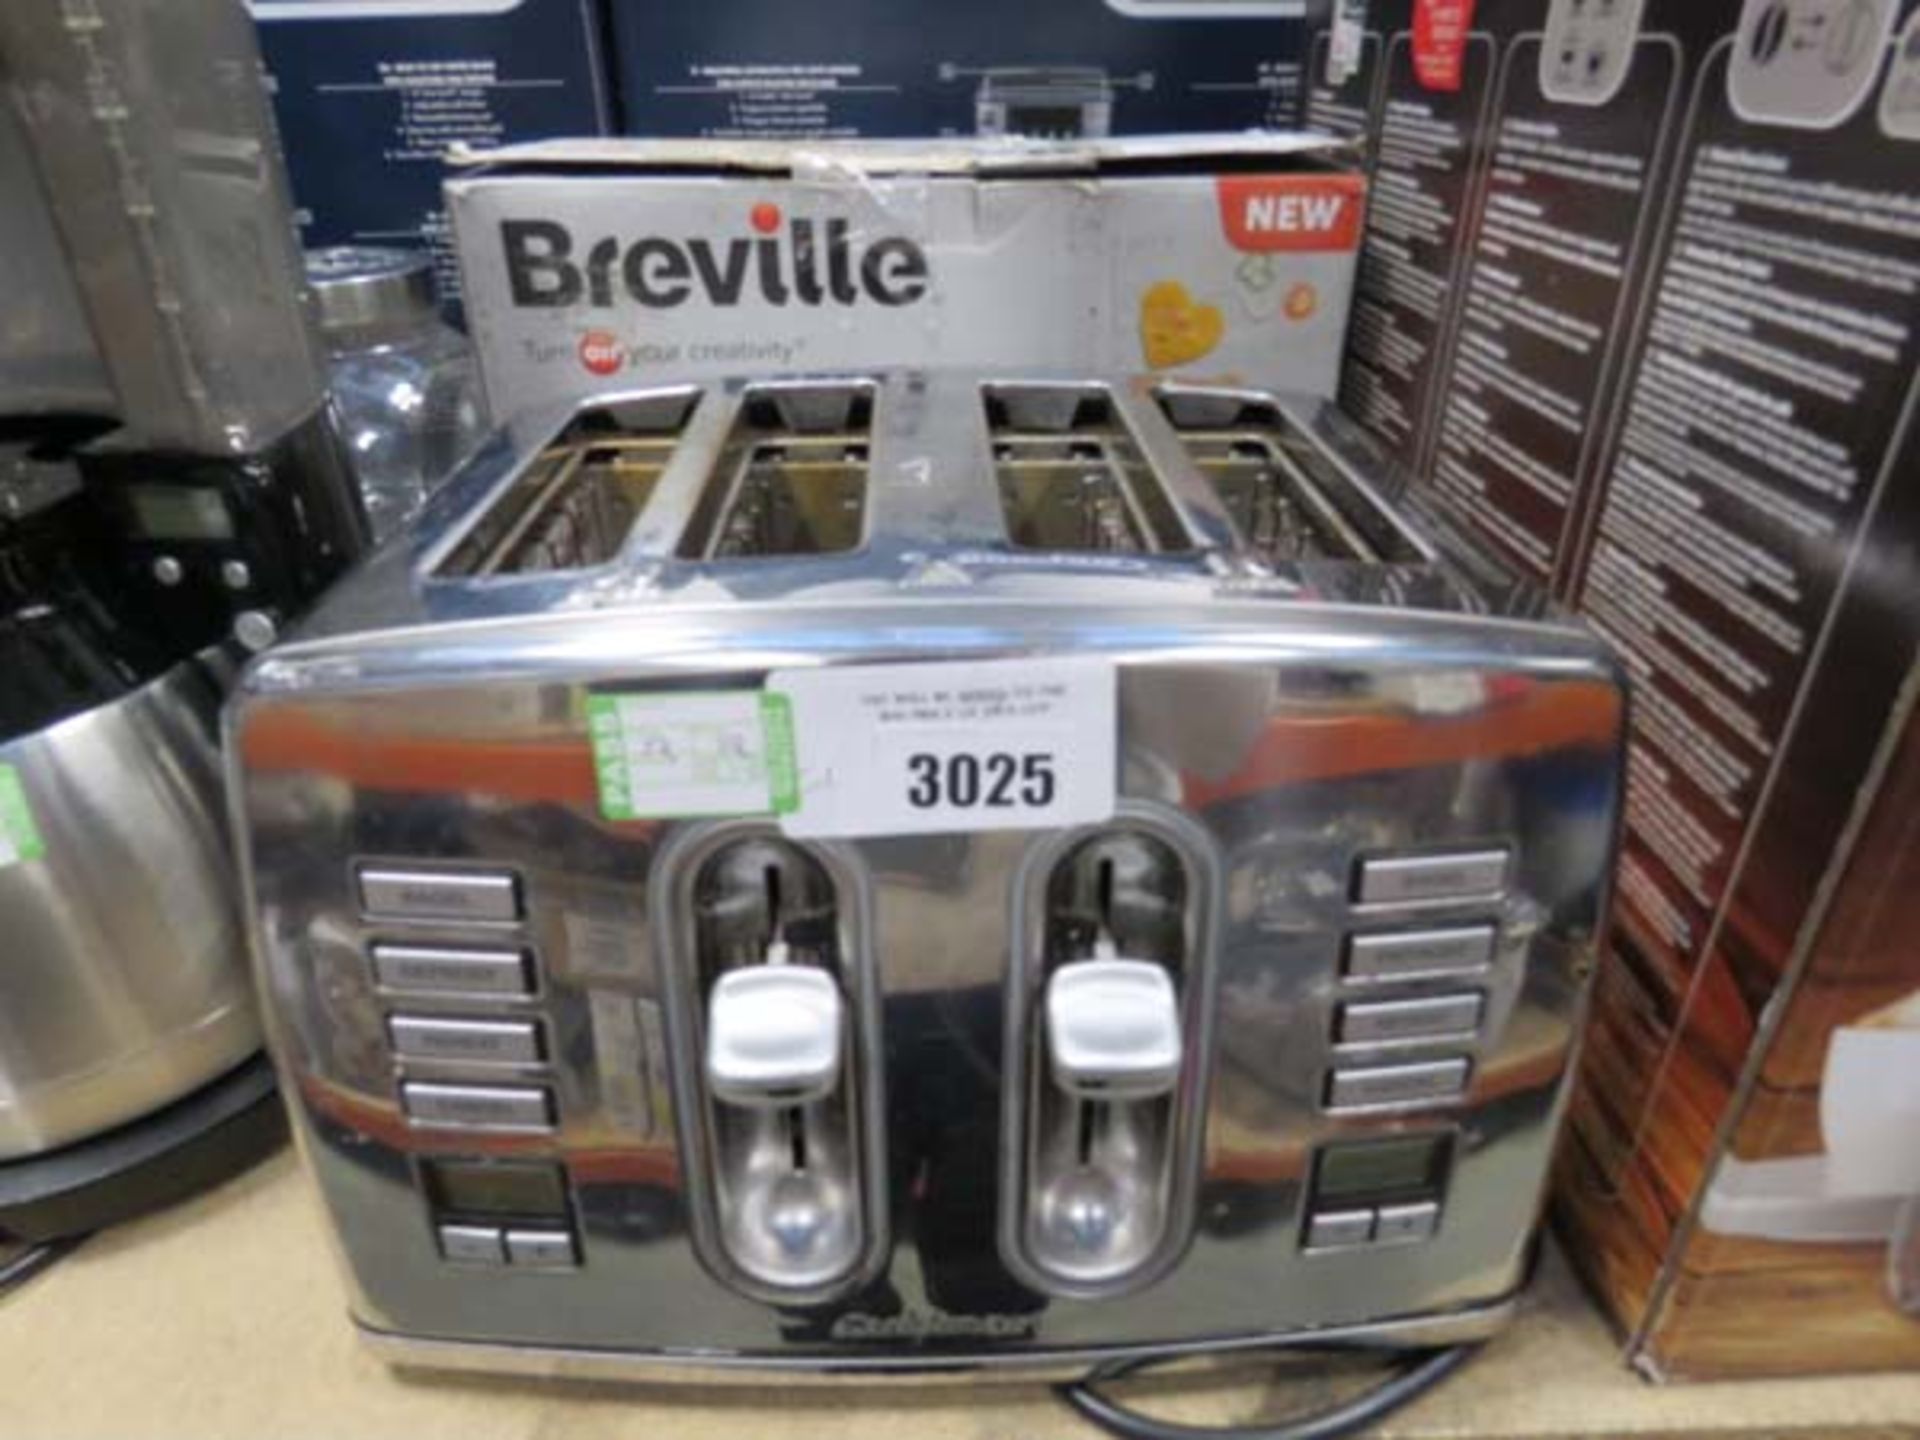 Breville sandwich maker plus 4 slice toaster